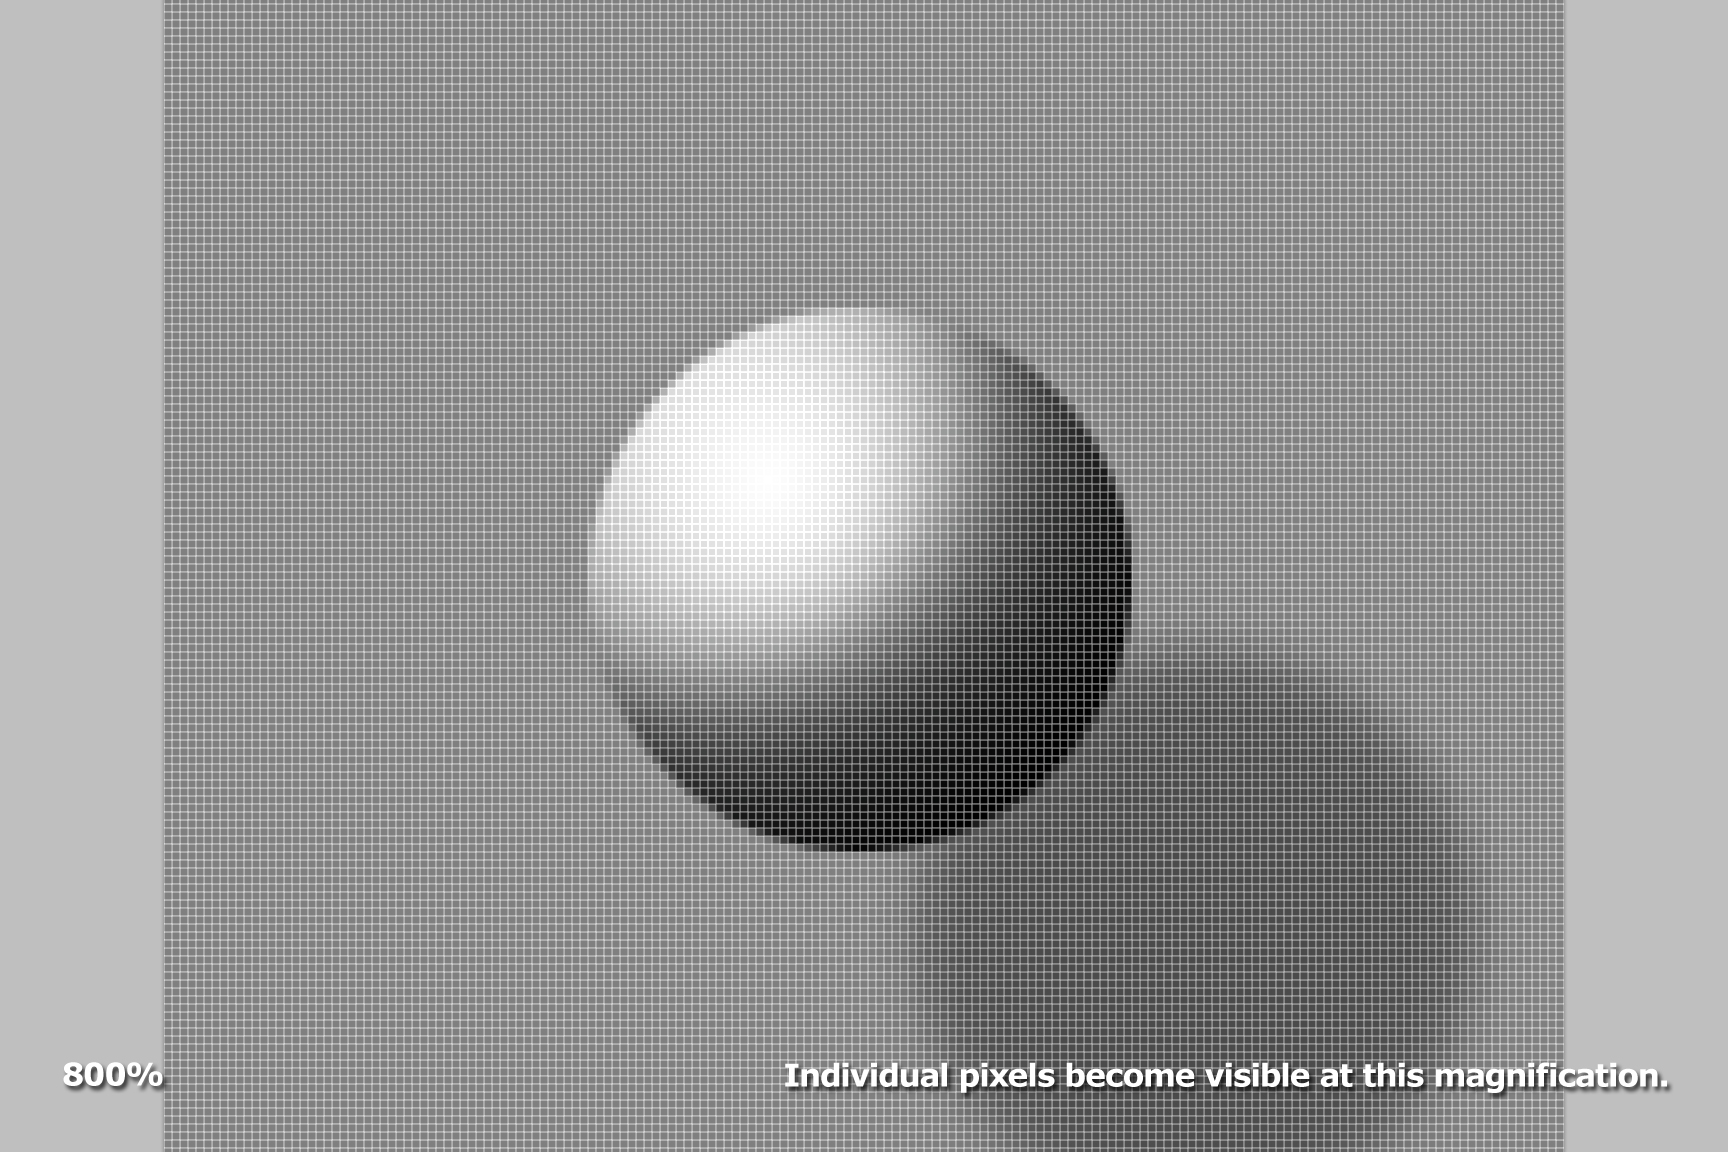 800% Individual pixels become visible at this magnification.